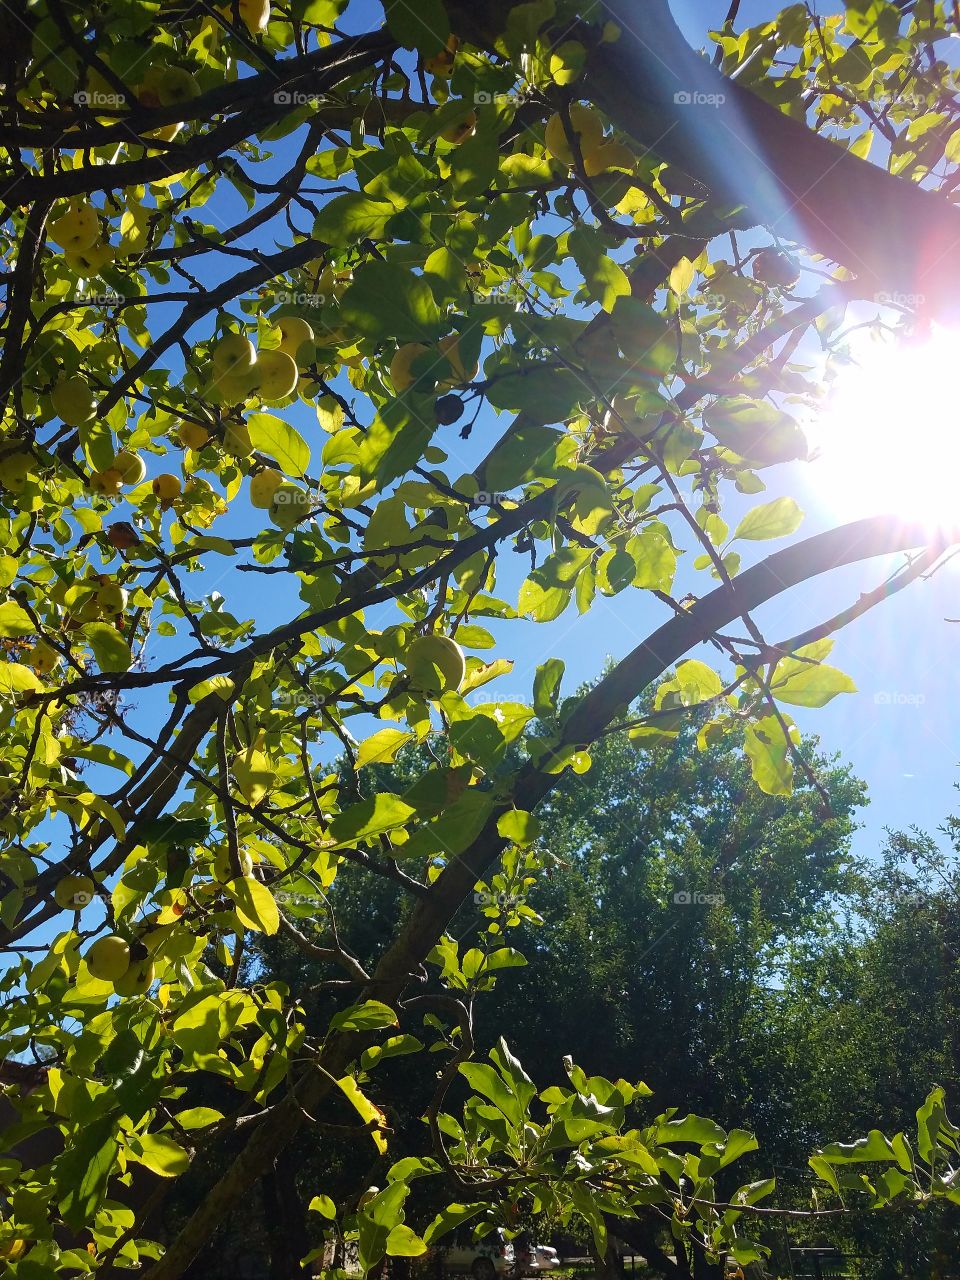 Sunlight through the trees